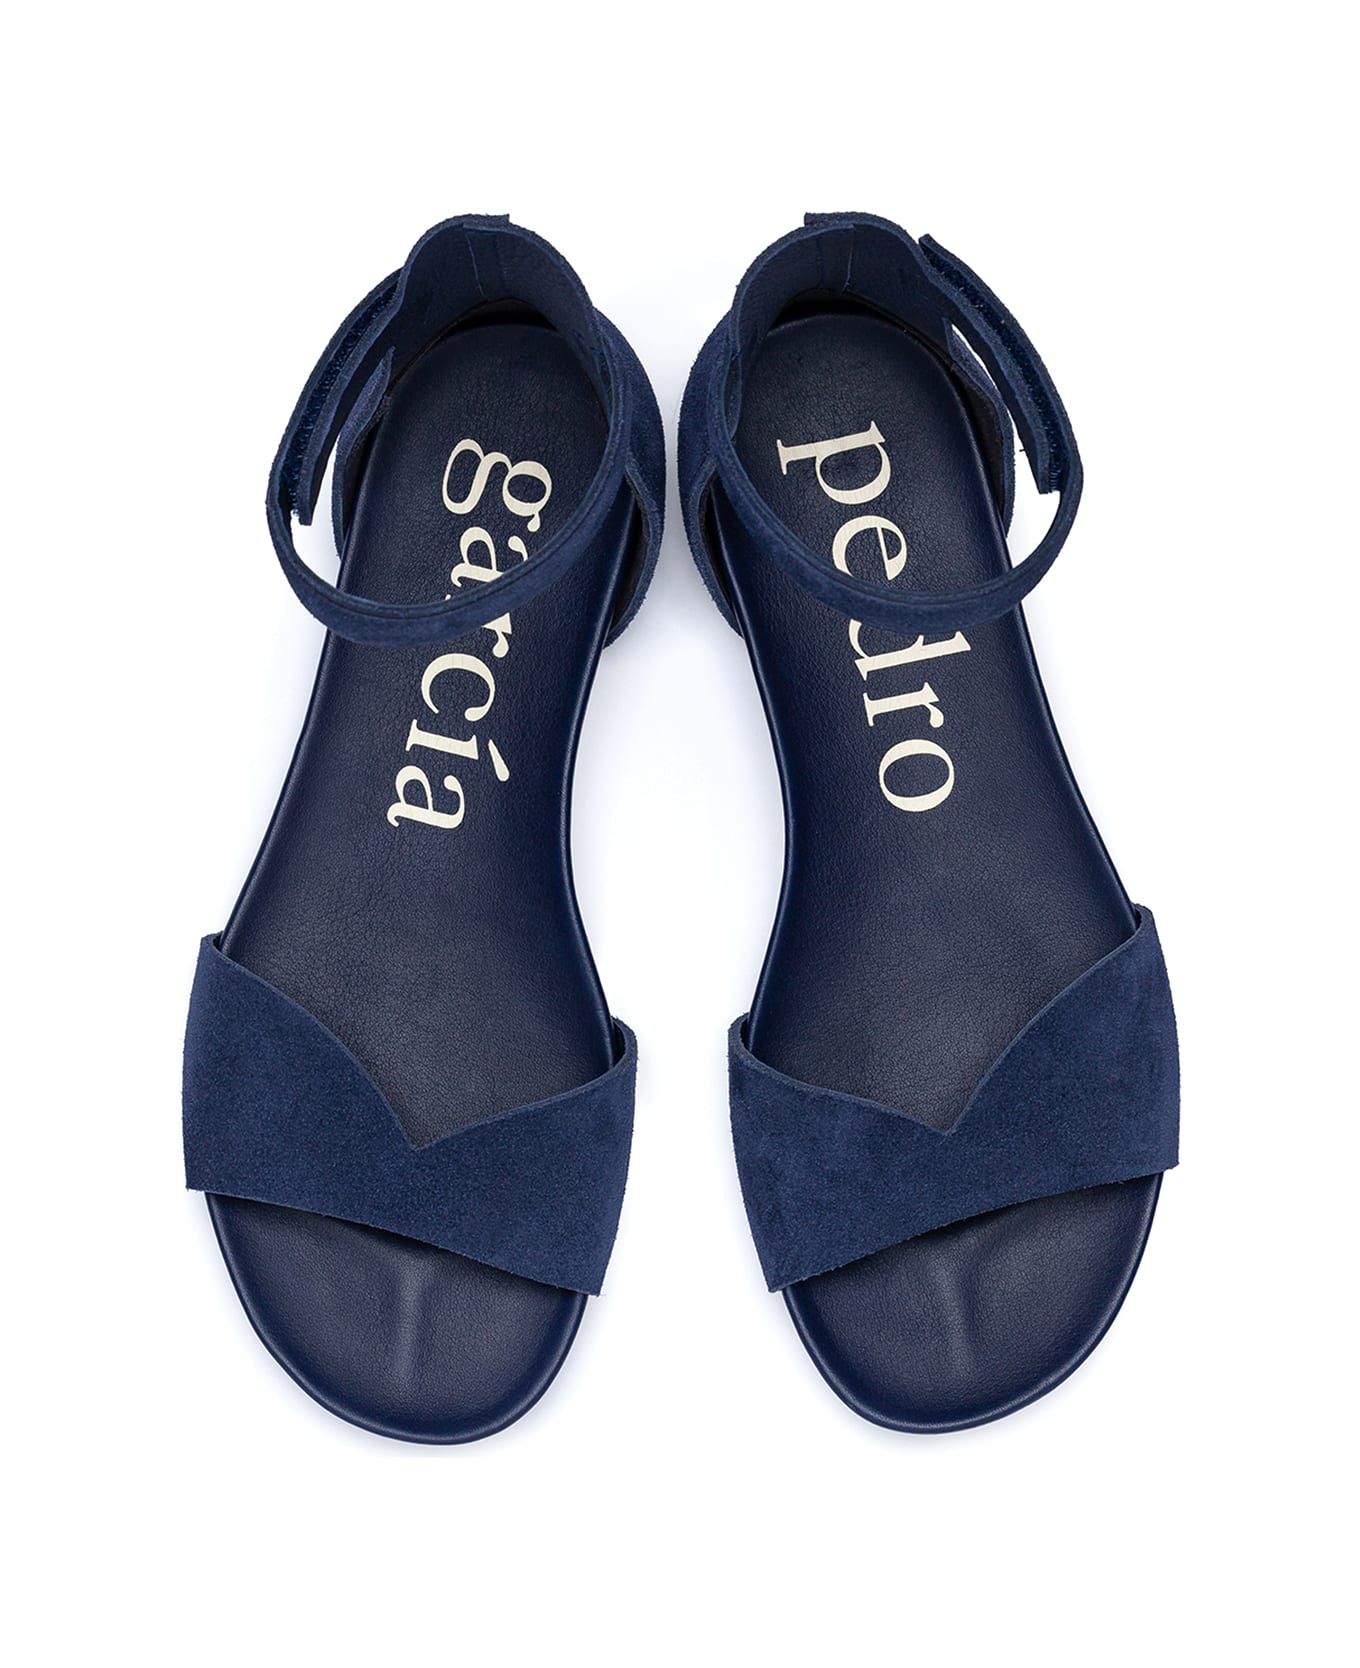 Pedro Garcia Jela Blue Suede Sandal With Strap - MARINA サンダル